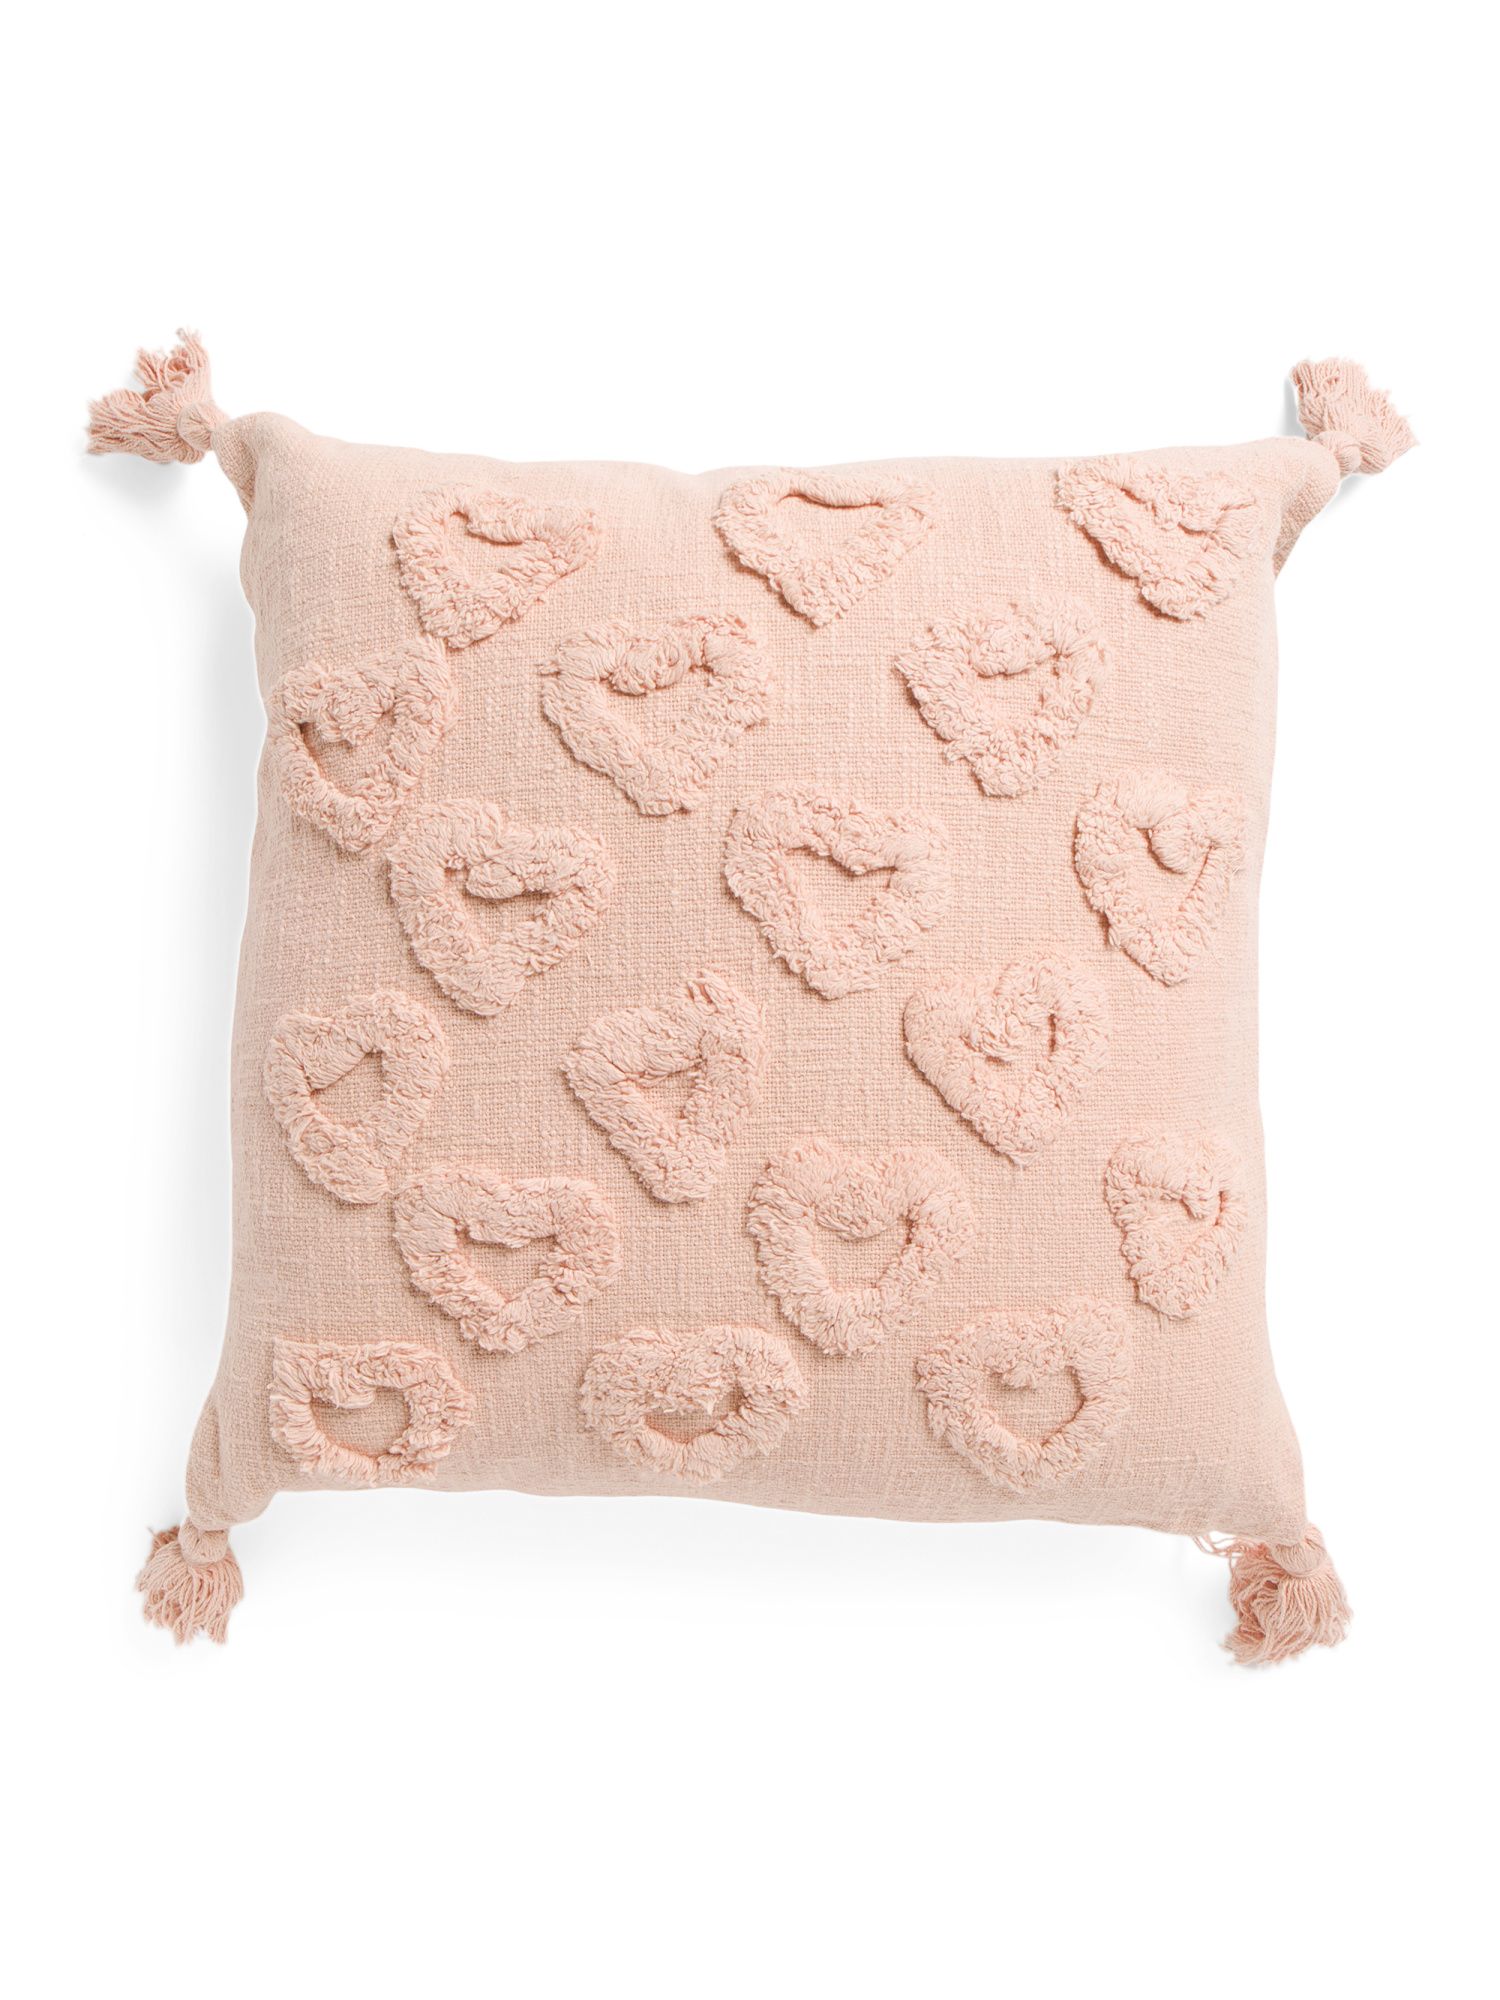 20x20 Tufted Hearts Pillow With Tassels | TJ Maxx